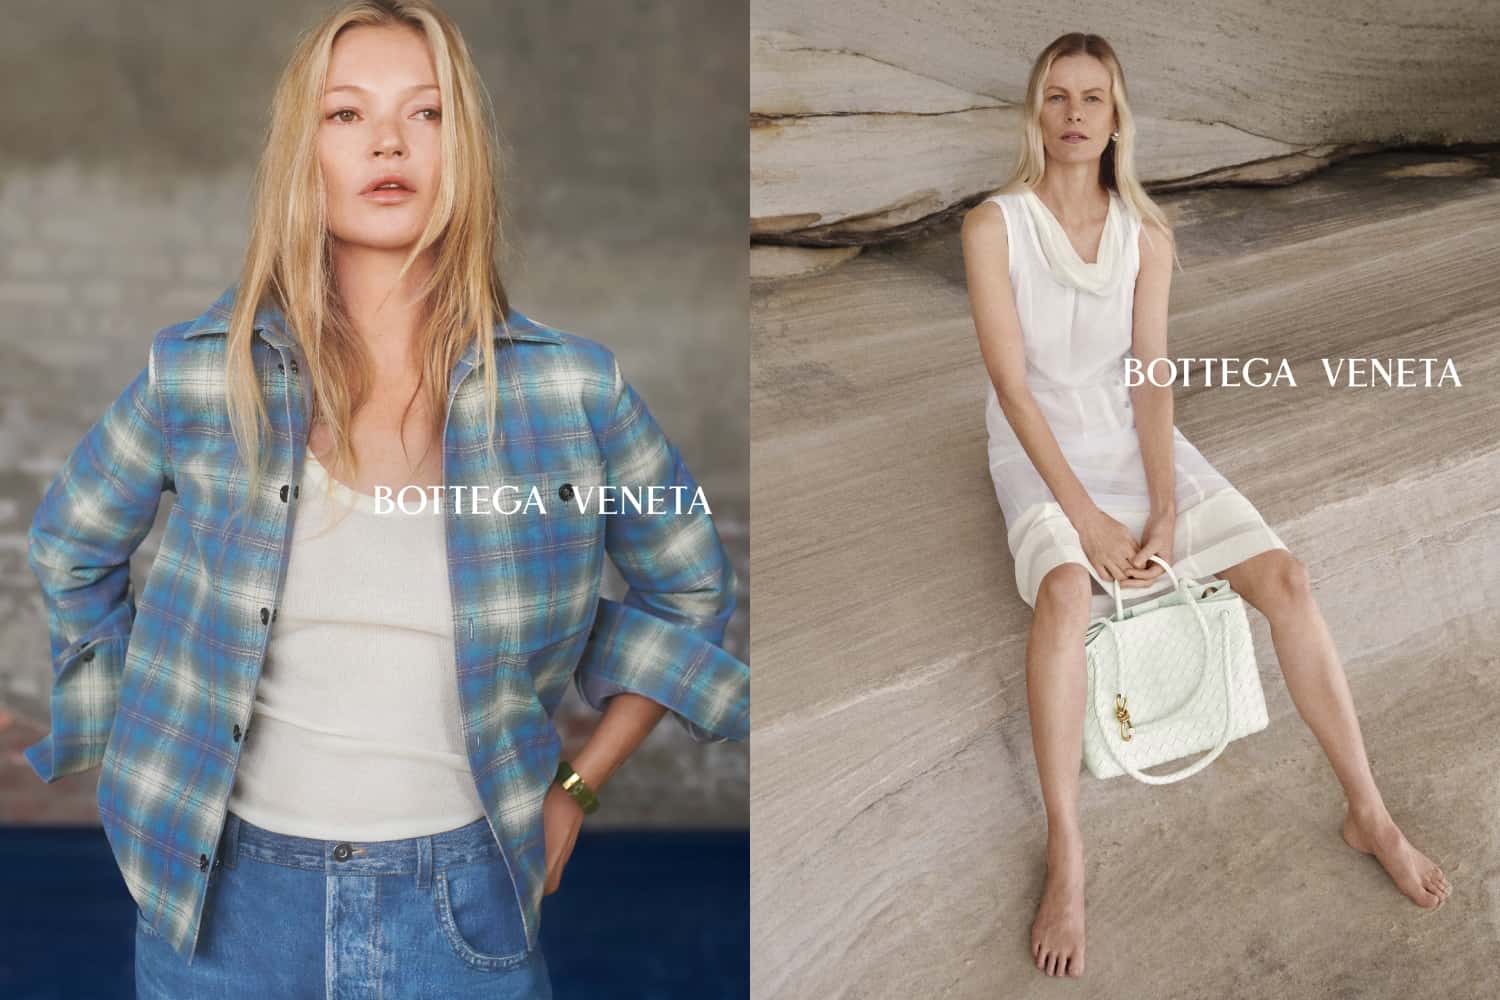 Kate Moss Fronts New Bottega Veneta Campaign, And More!